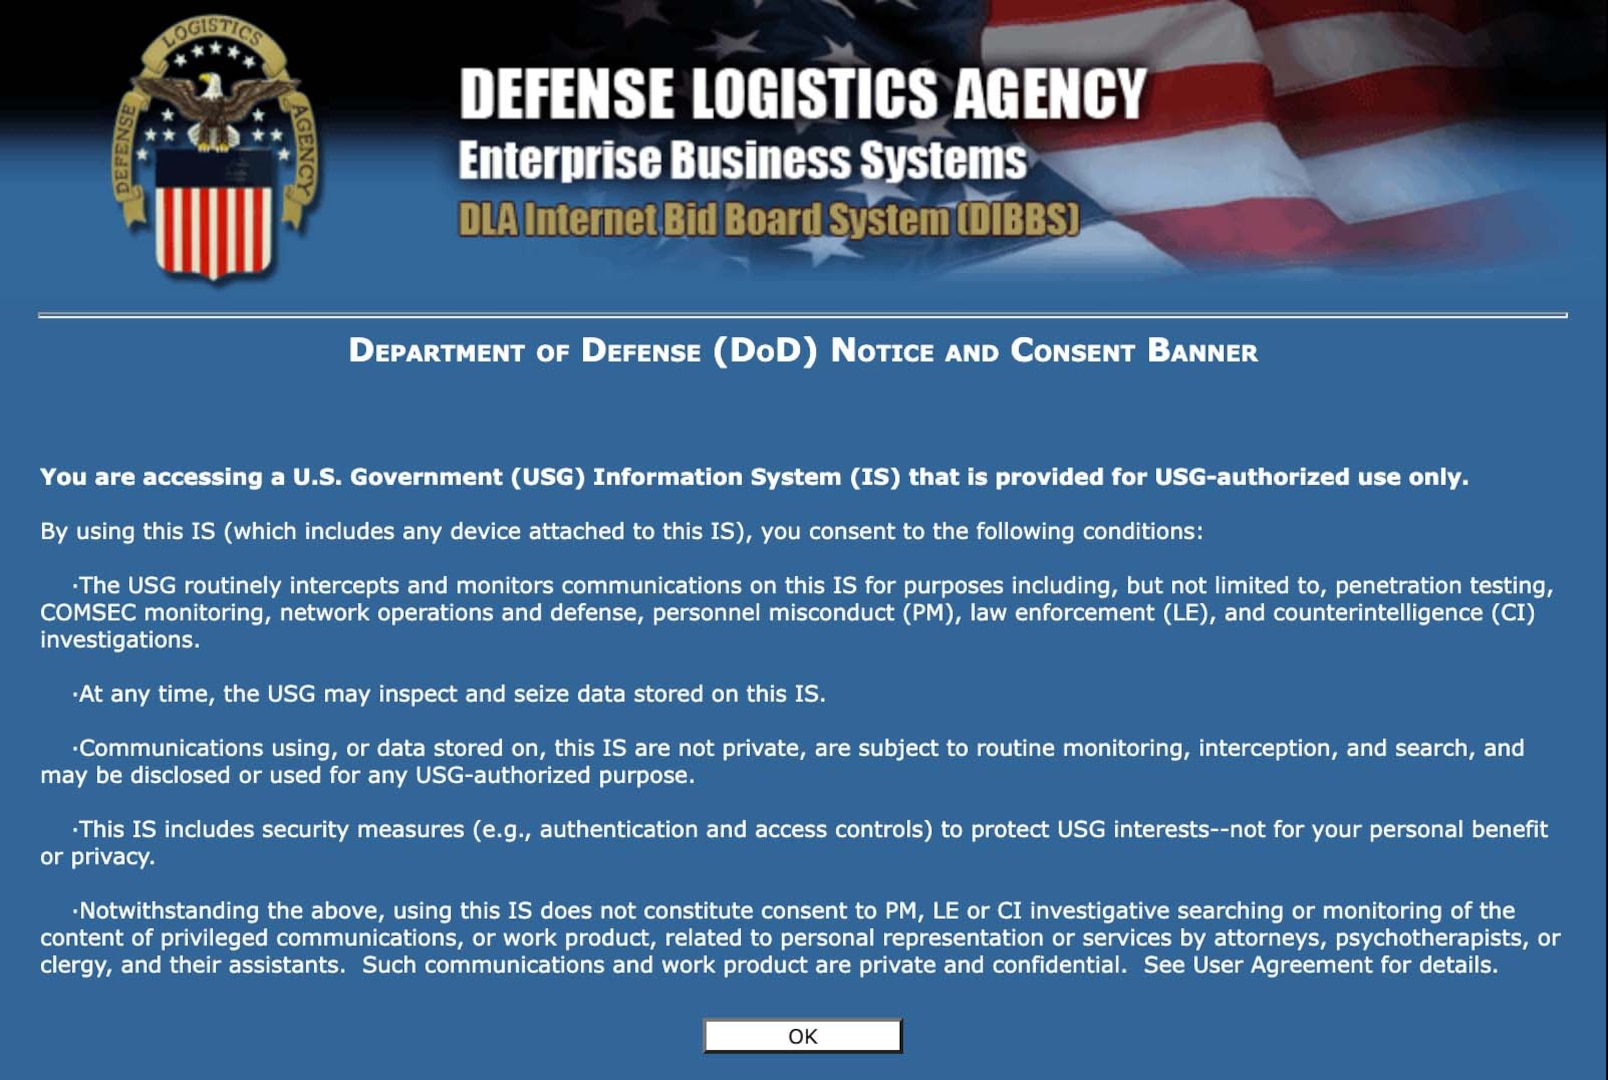 DIBBS homepage screenshot